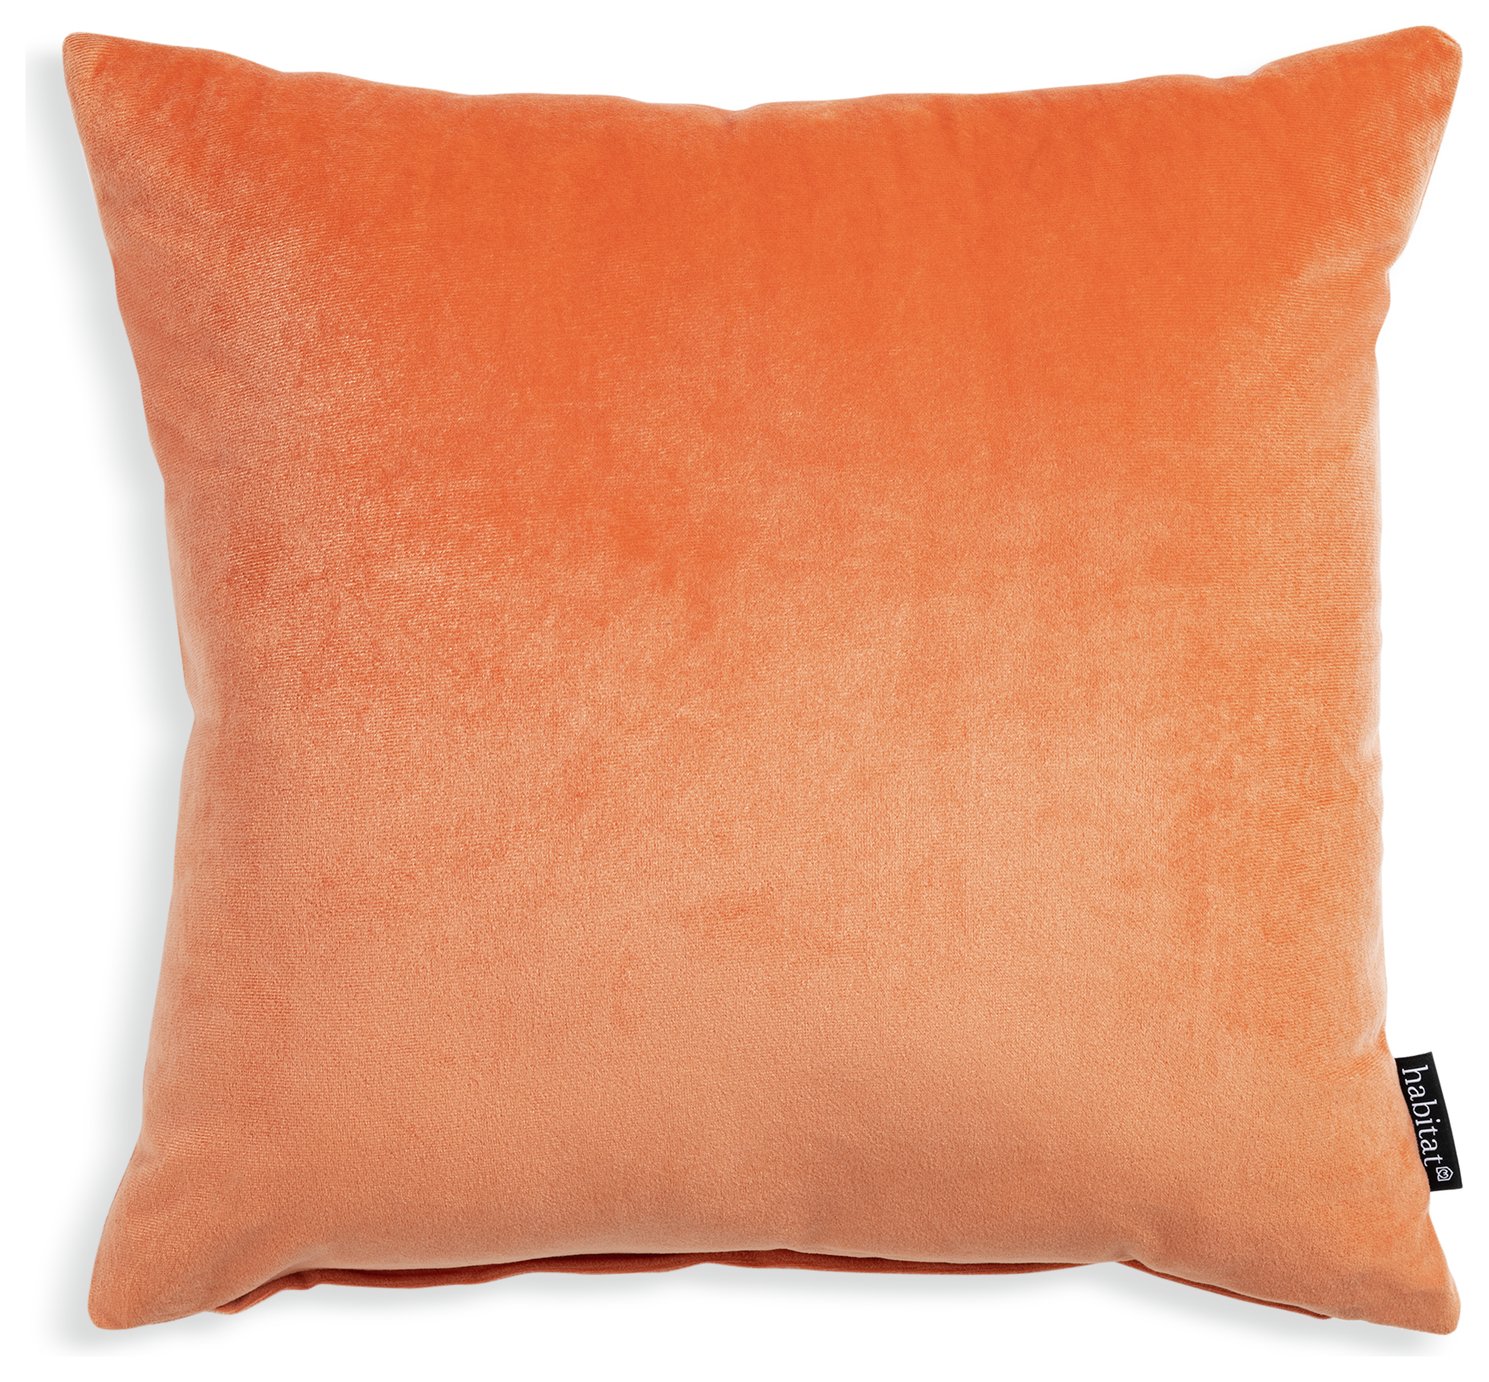 Habitat Velvet Cushion - Orange - 43x43cm